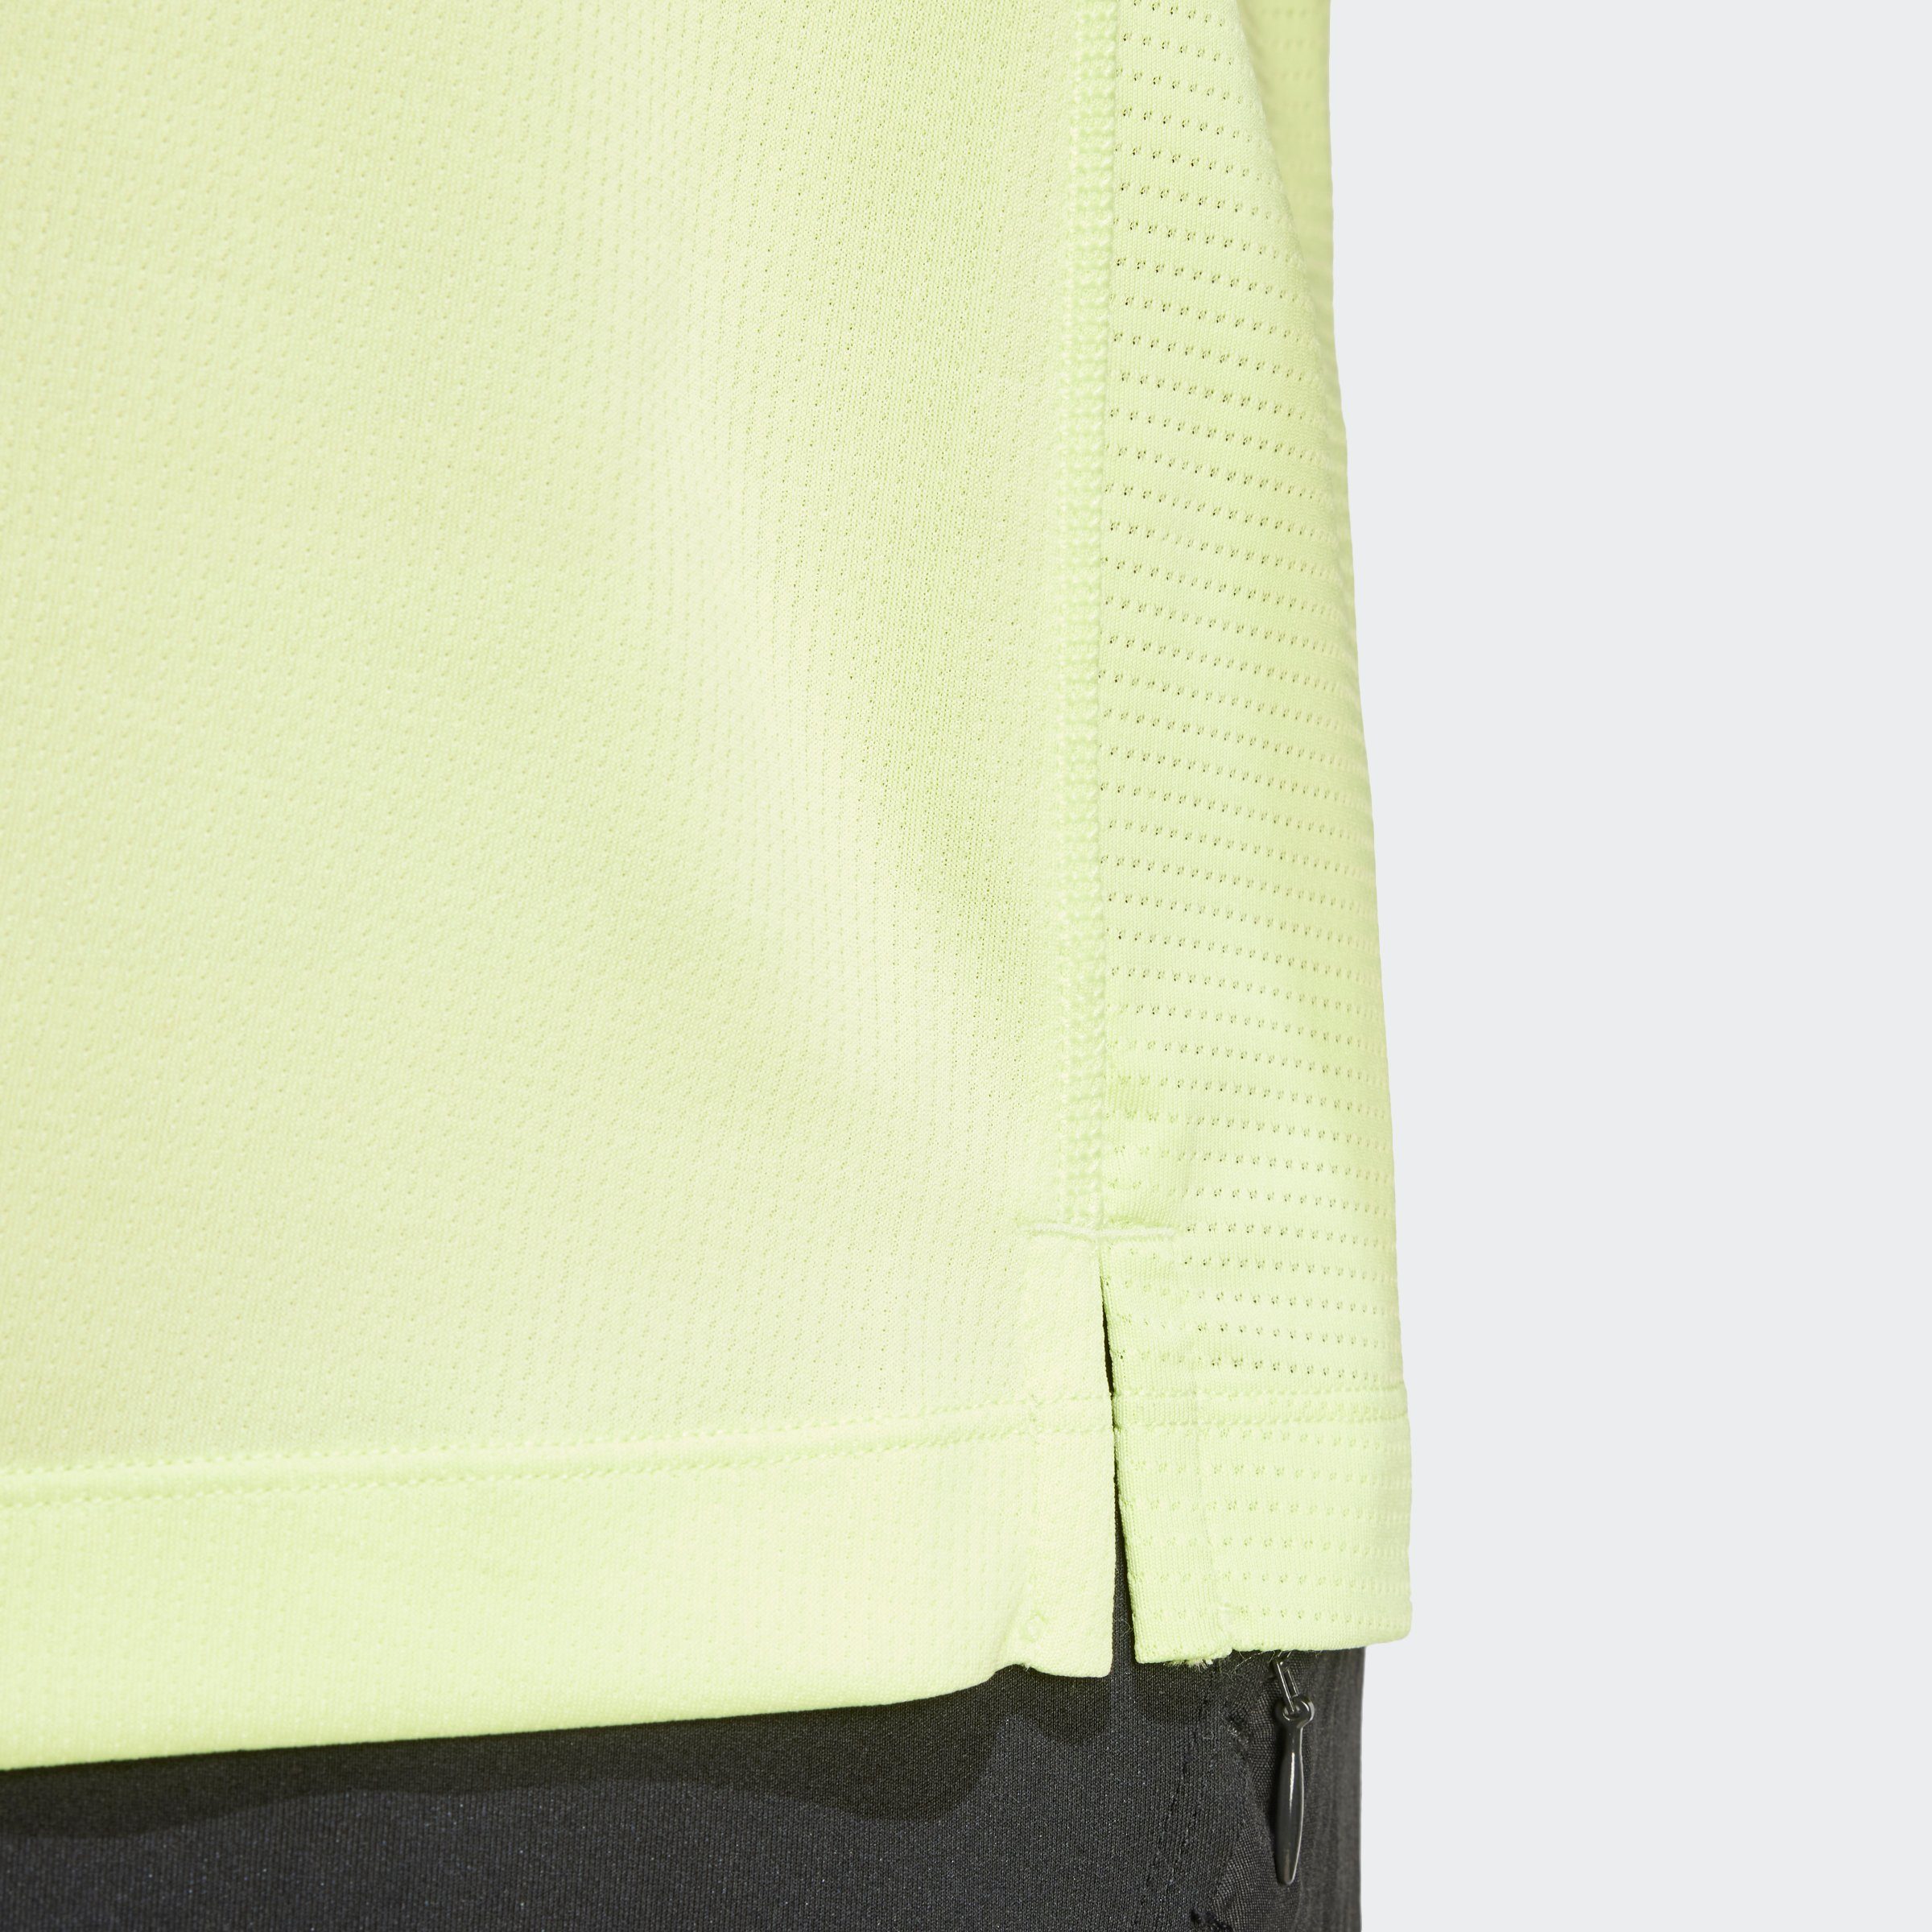 Lime adidas / 3-STREIFEN White TRAIN Silver Pebble TRAINING ICONS / Pulse Performance T-Shirt